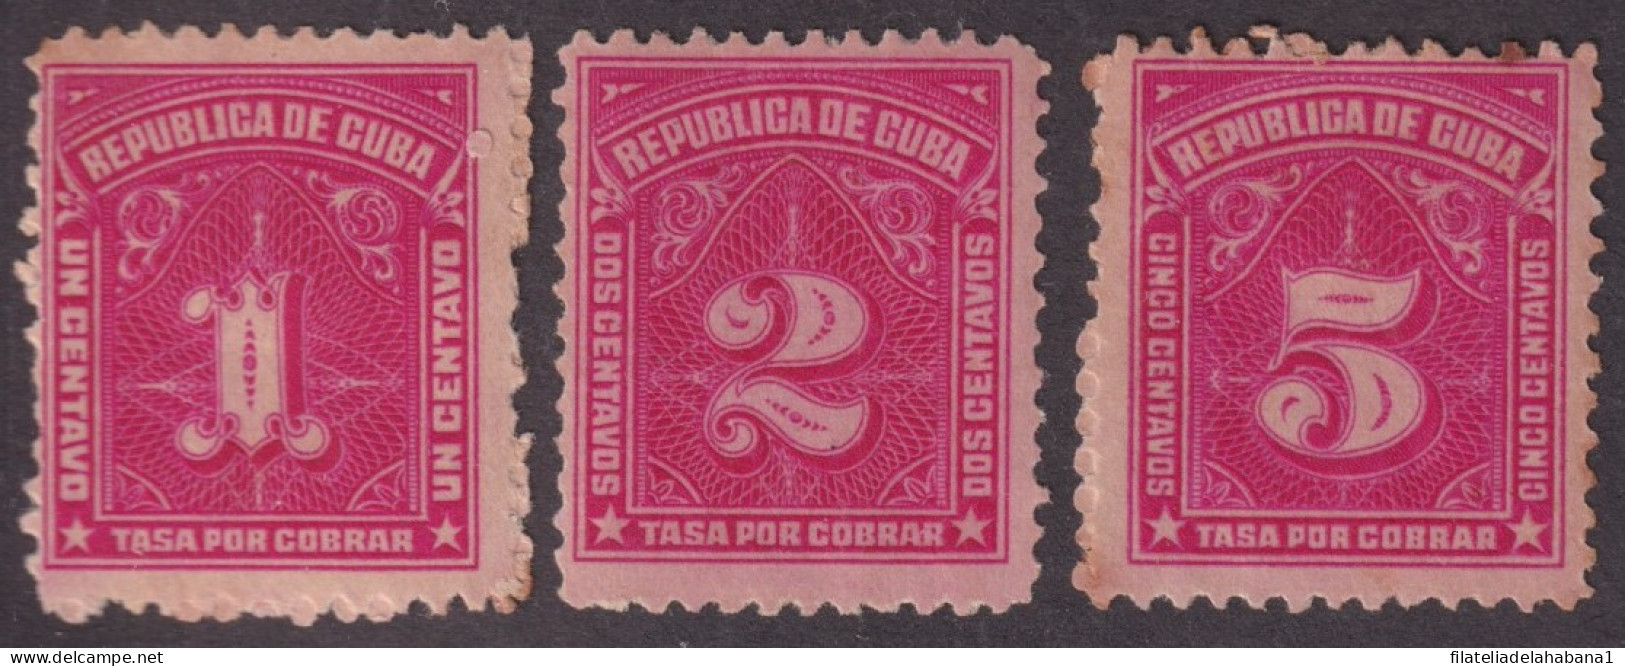 1927-78 CUBA REPUBLICA 1927 MH POSTAGE DUE TASA POR PAGAR COMPLETE SET.  - Nuovi